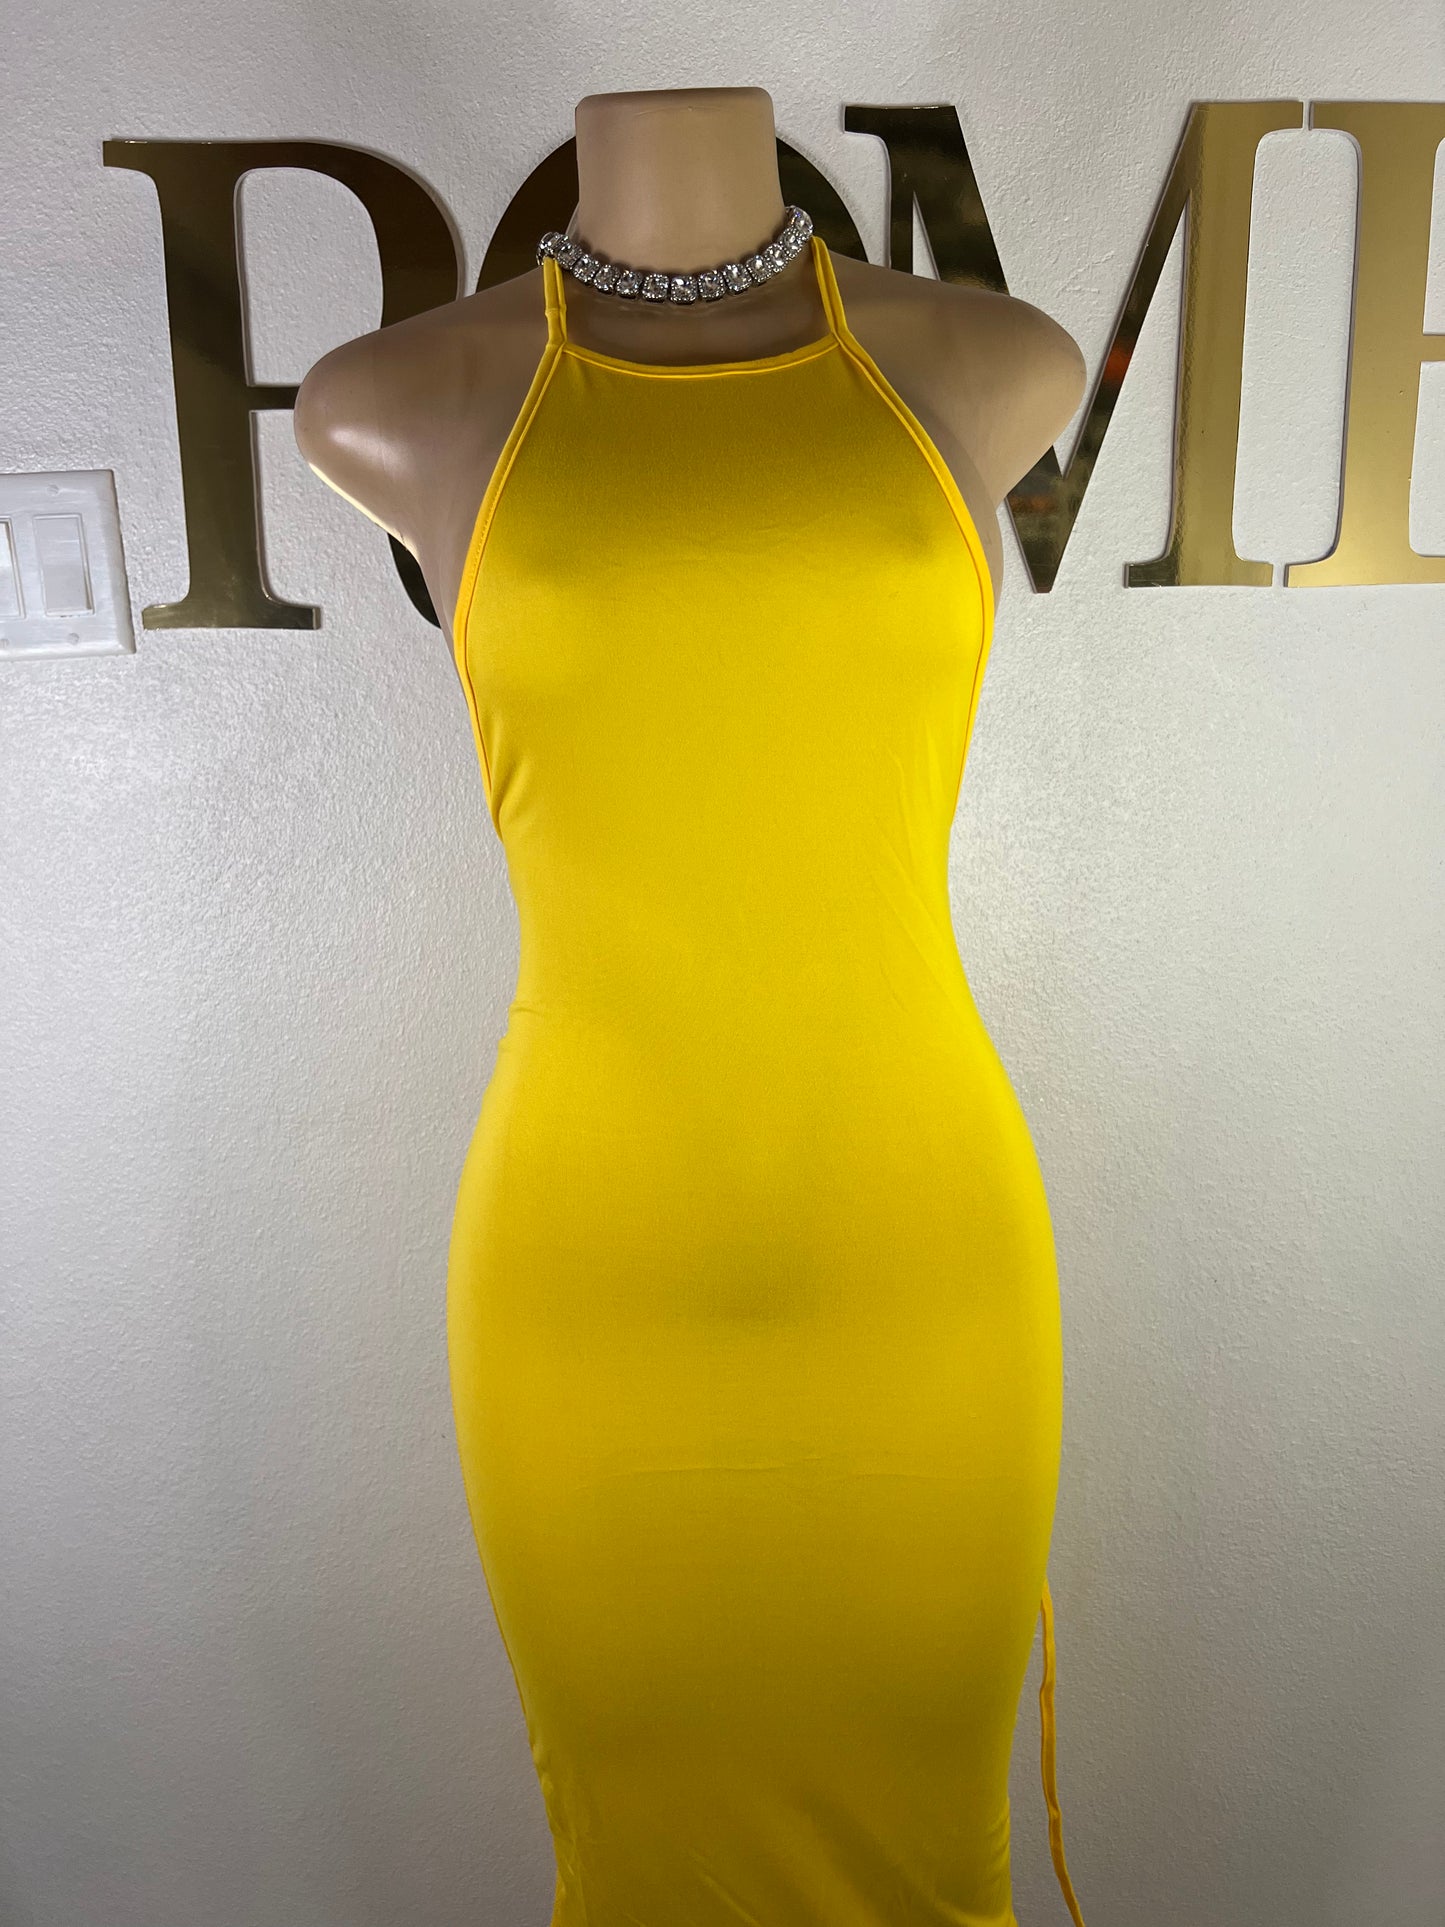 Carey Moon Dress (Yellow)